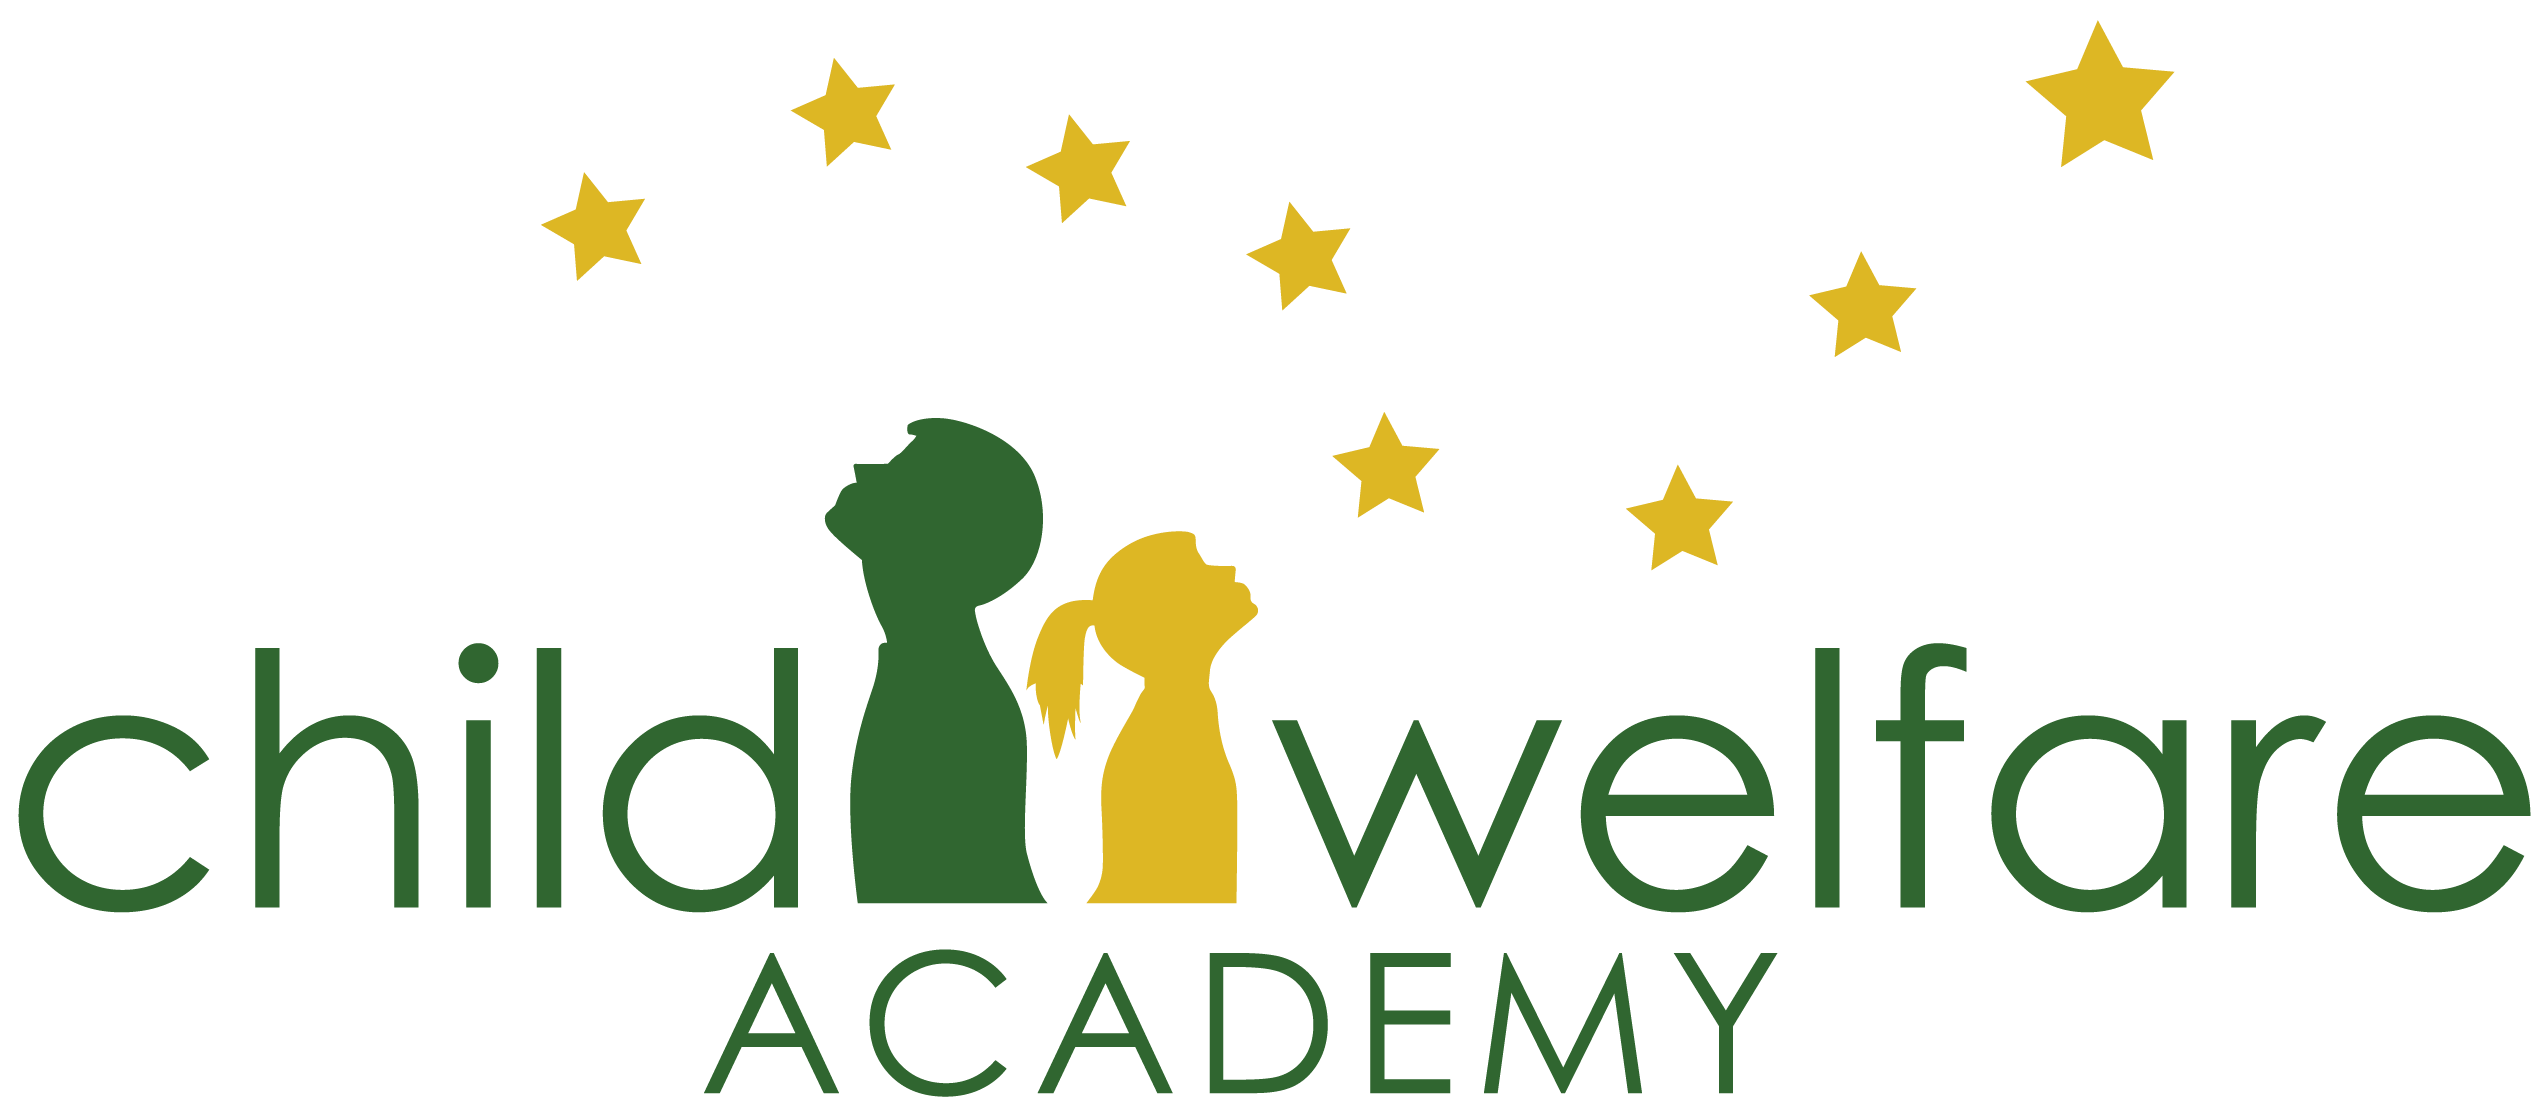 Child Welfare Academy logo